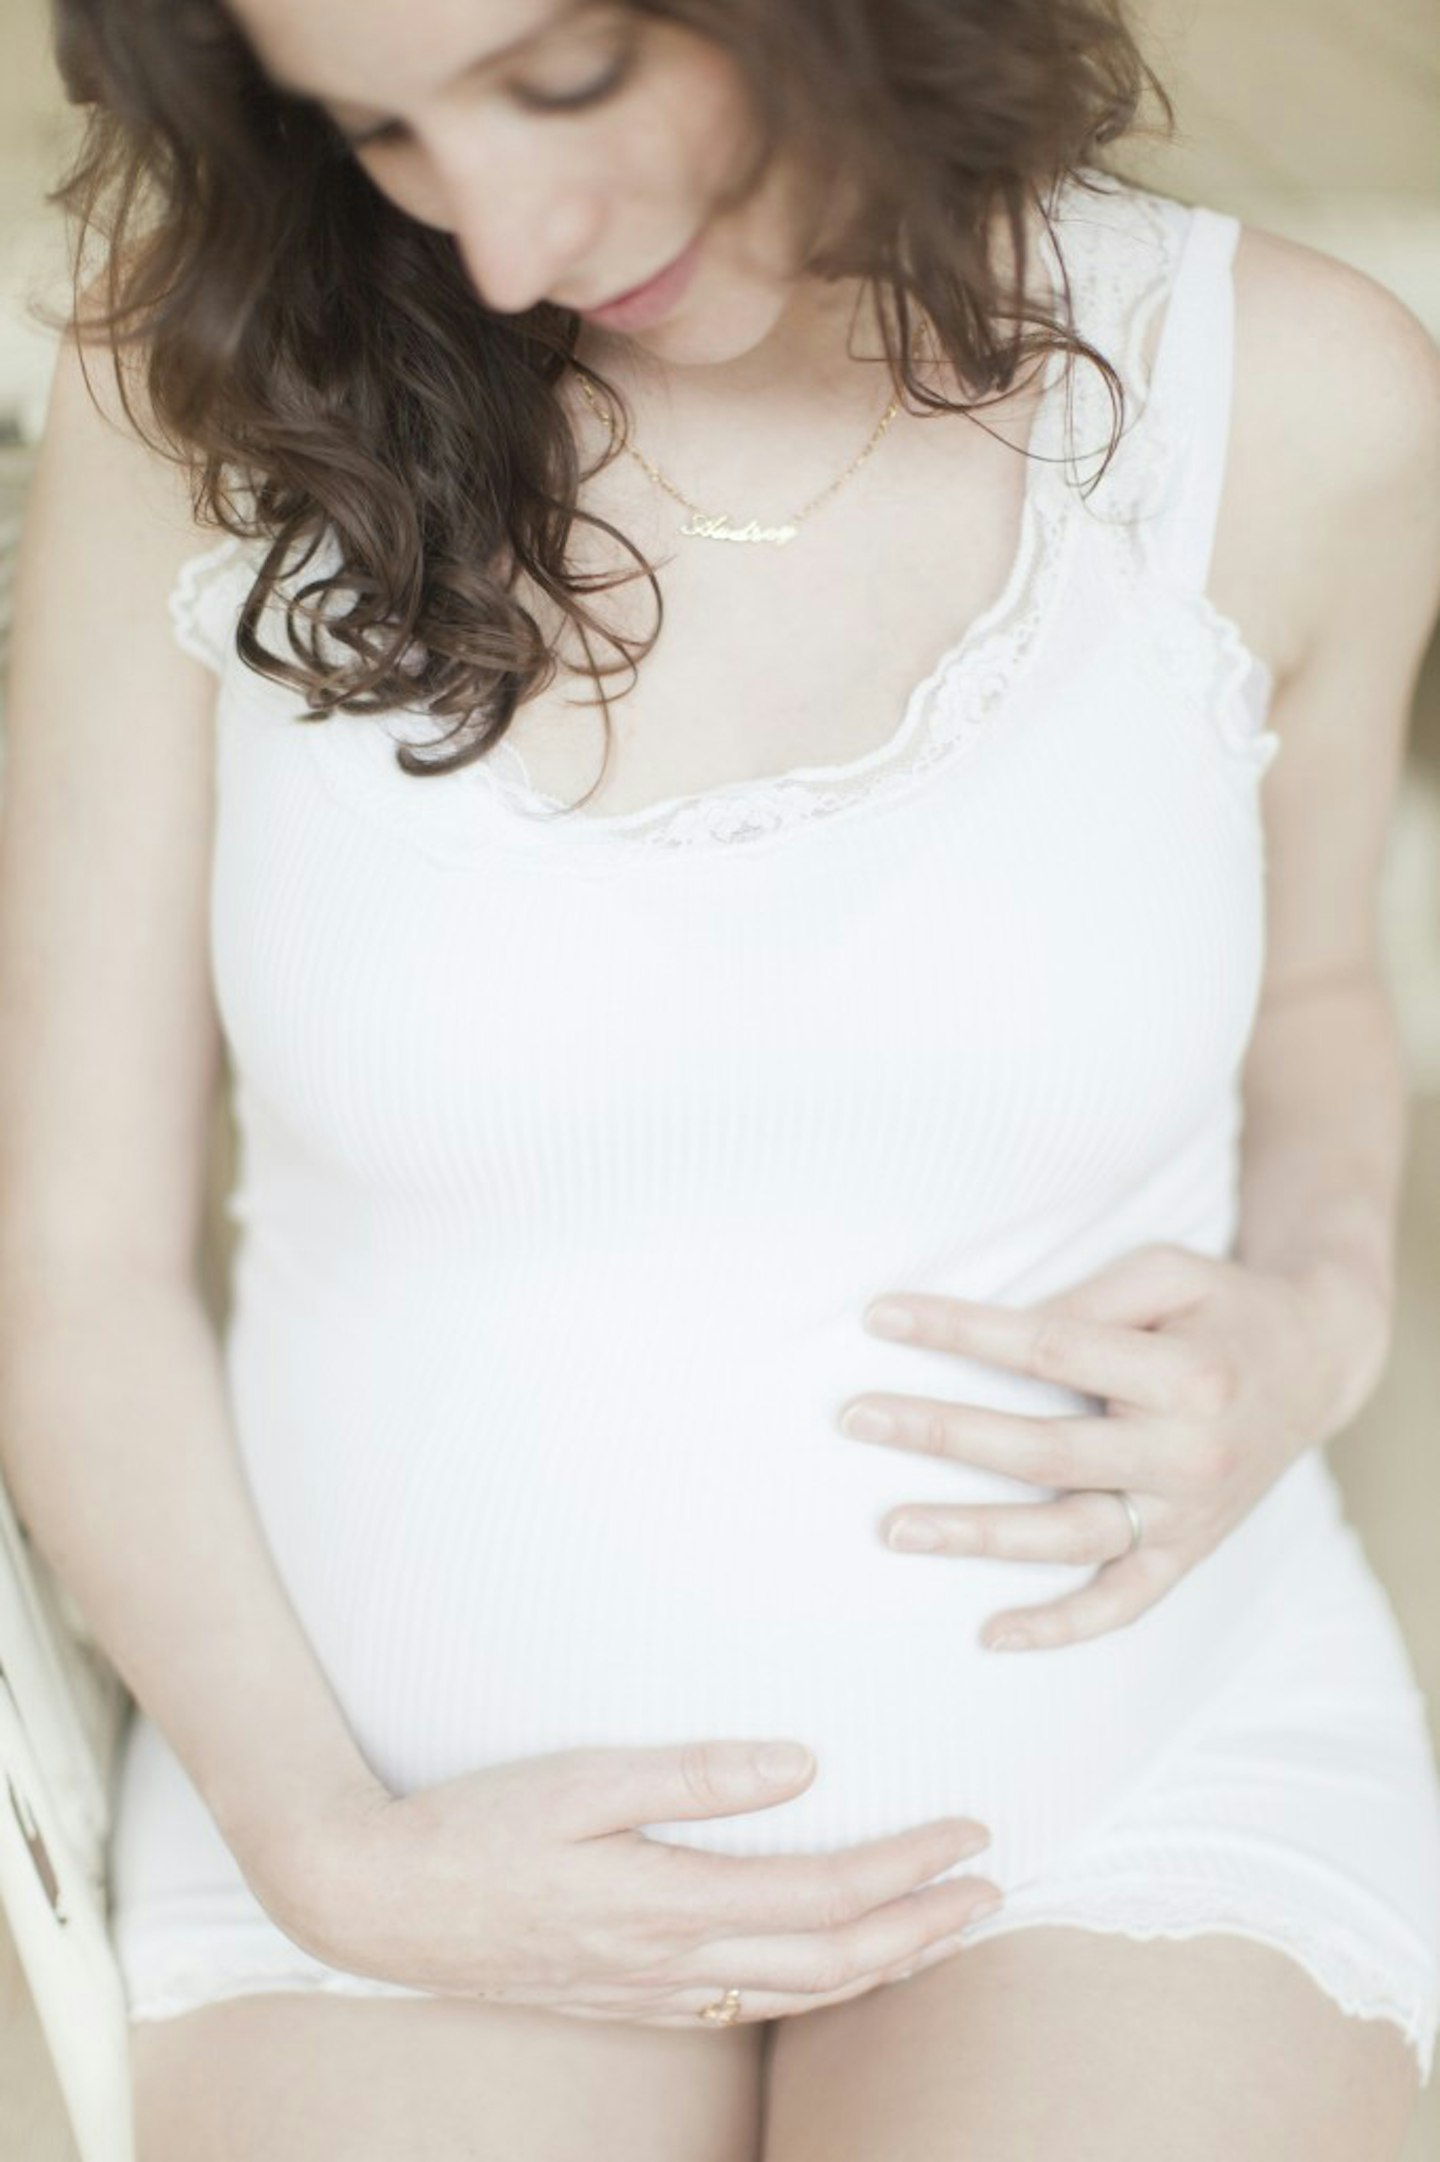 Pregnancy Health A-Z: Epilepsy